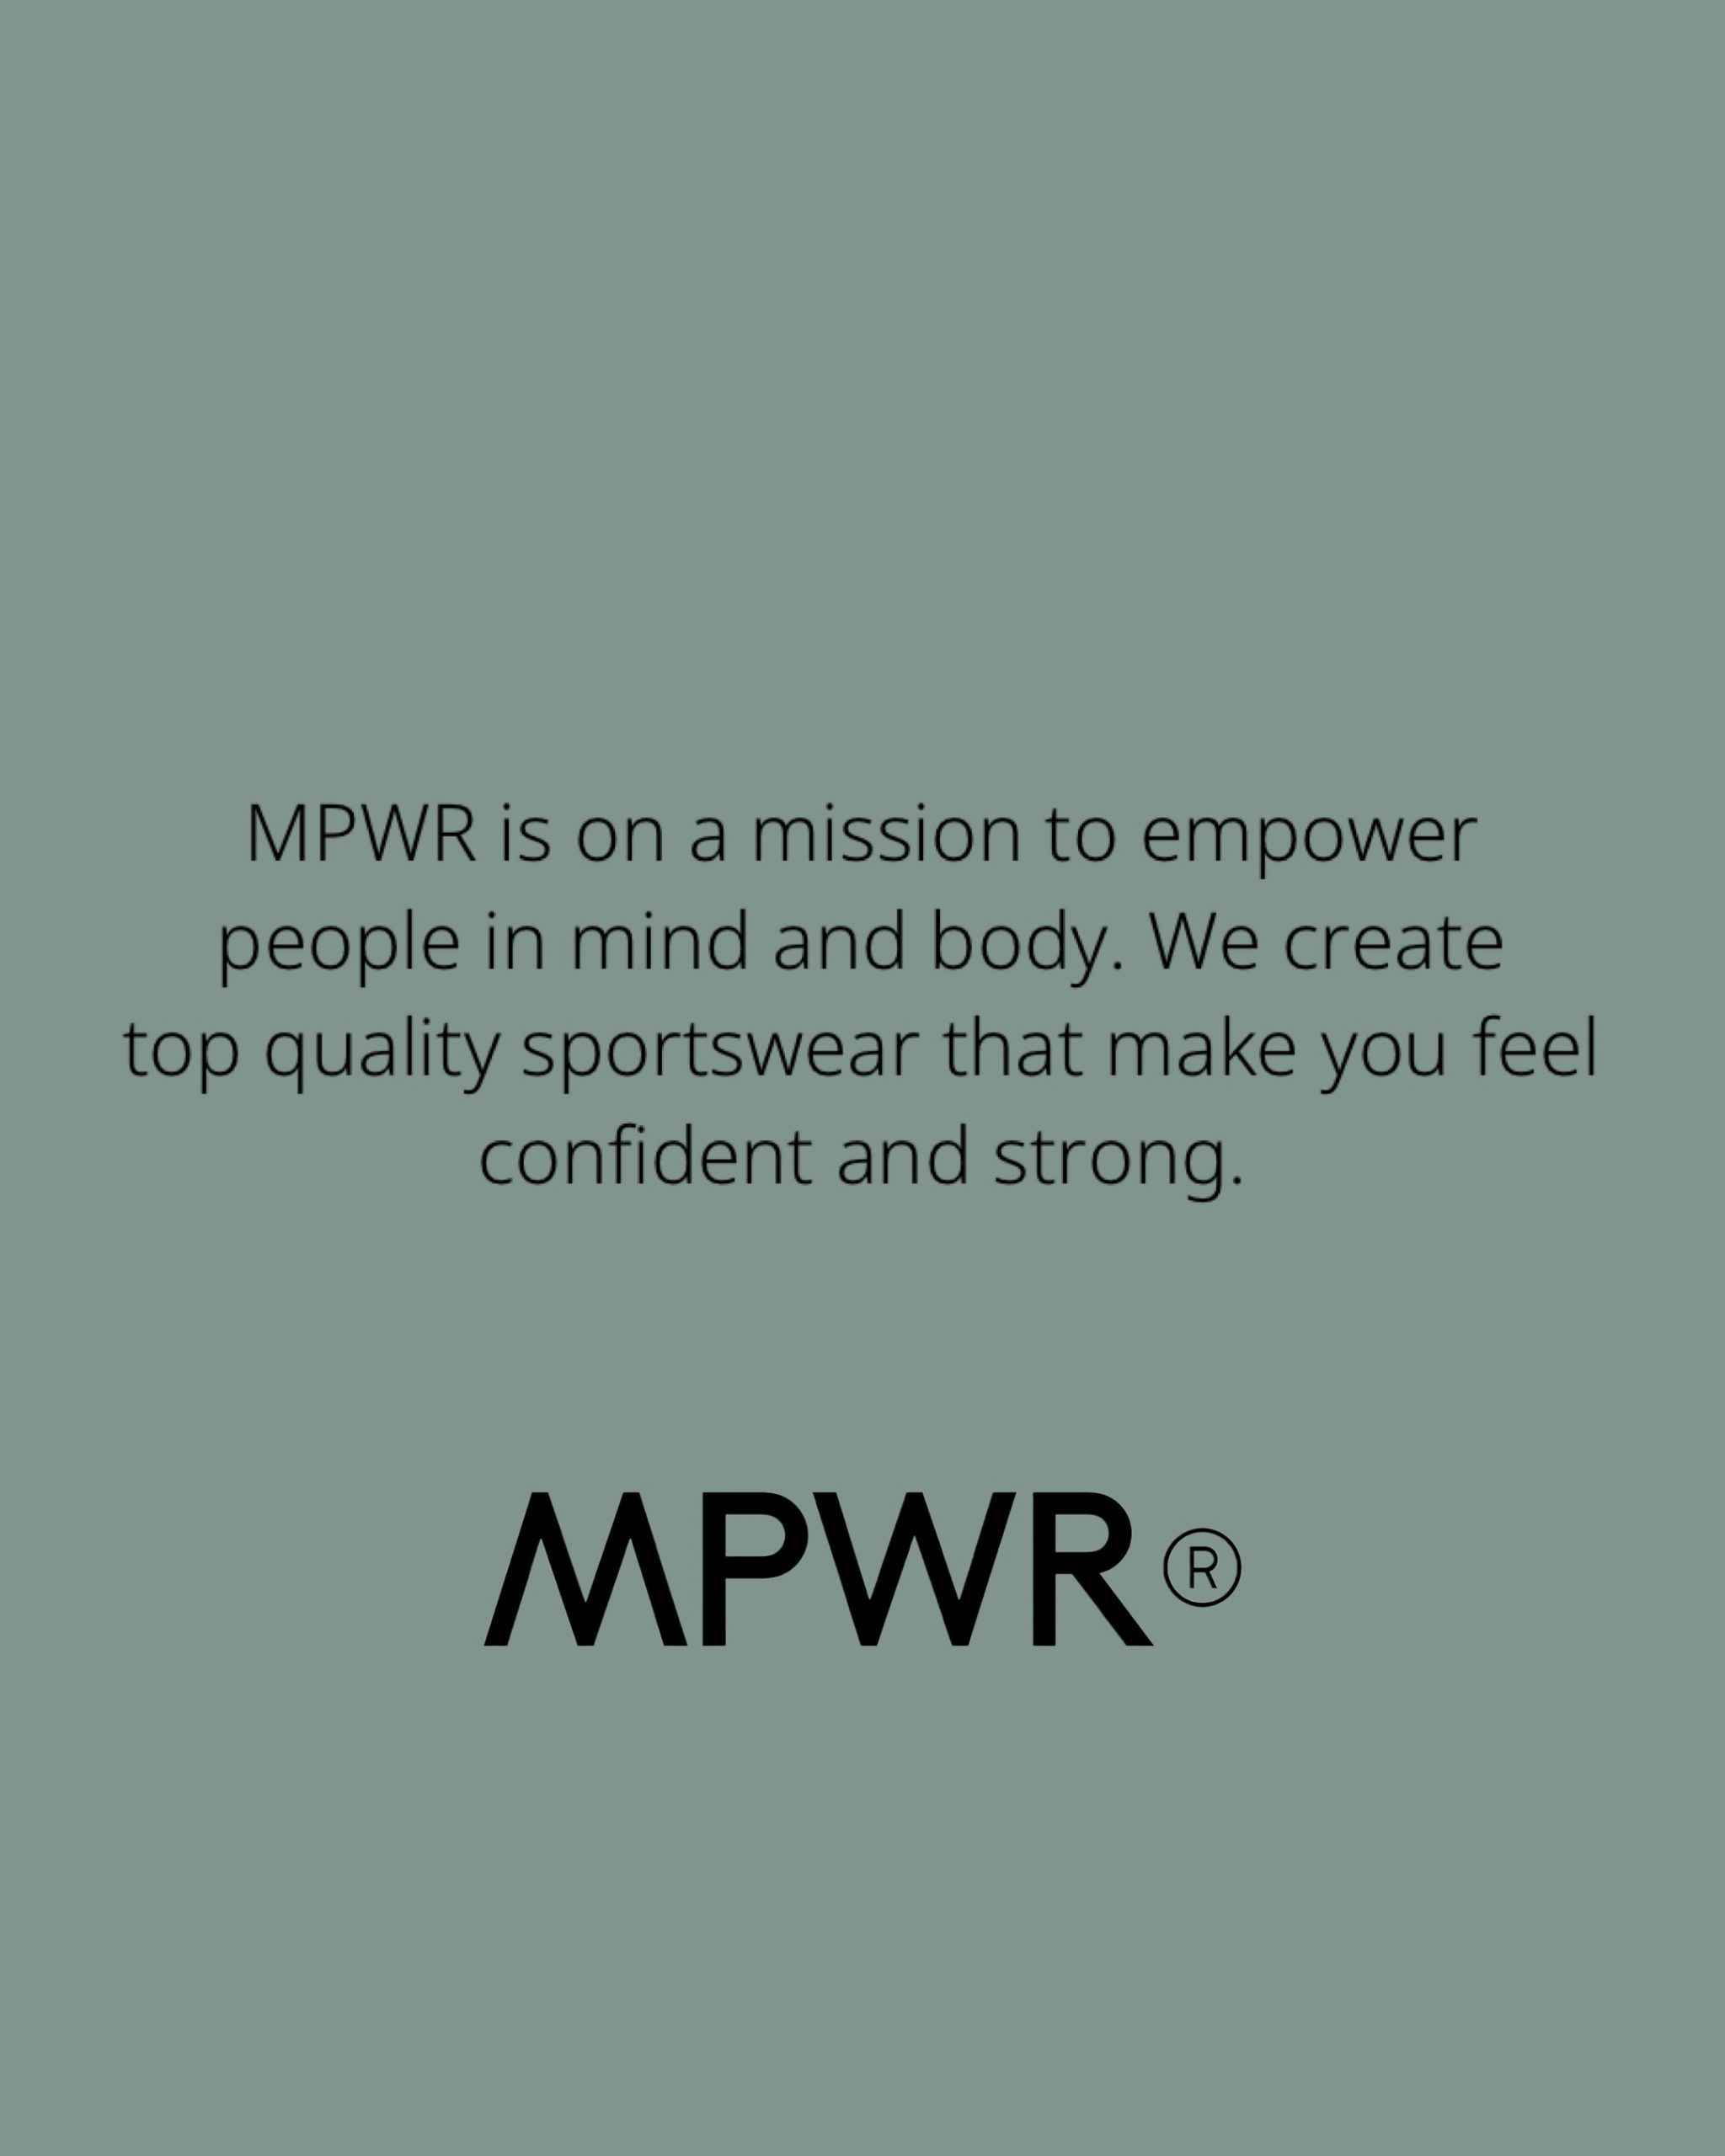 Kontakt med oss på MPWR